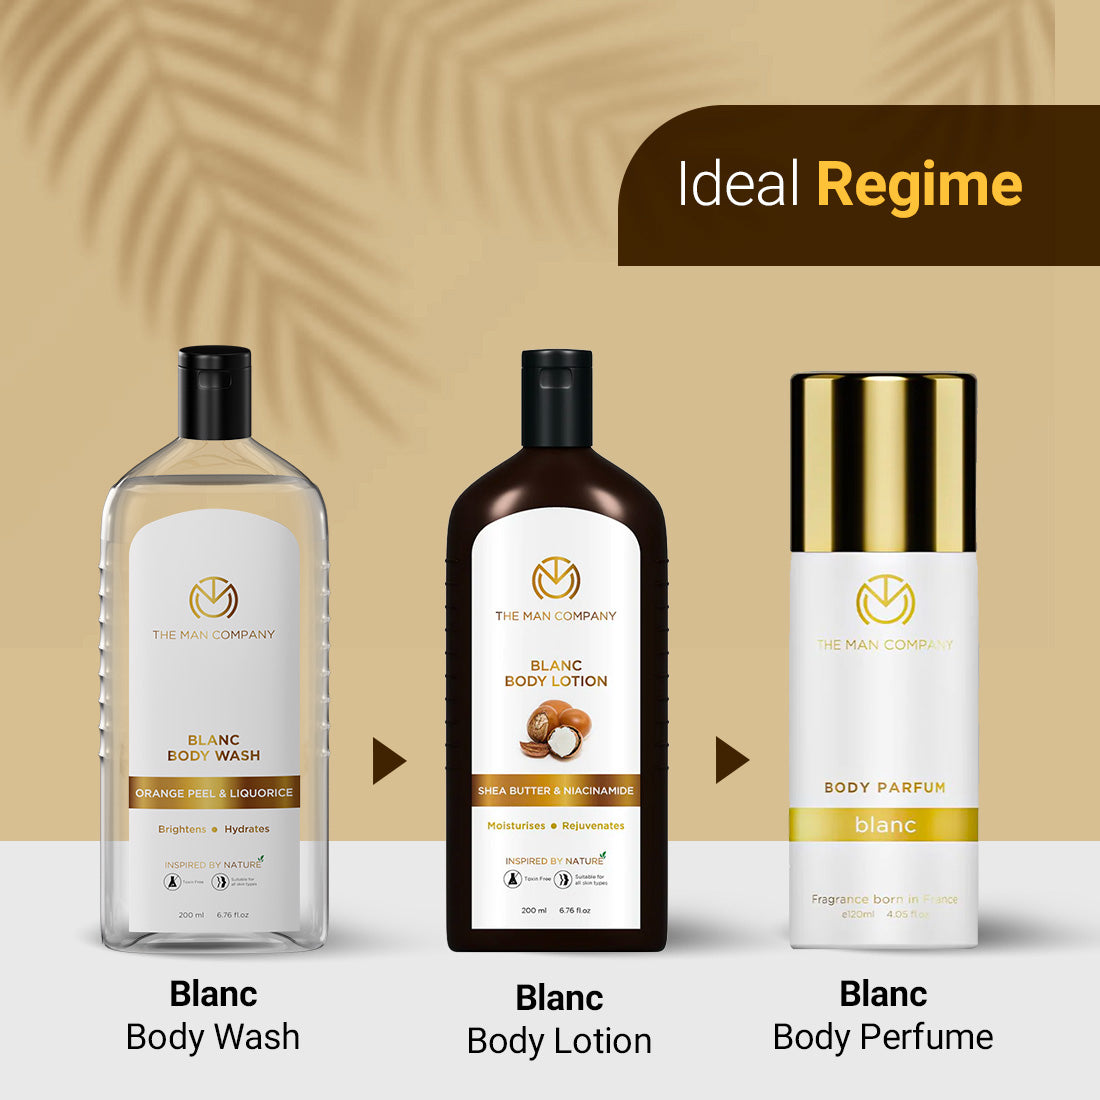 Blanc Wash | Orange Peel & Liquorice | The Man Company